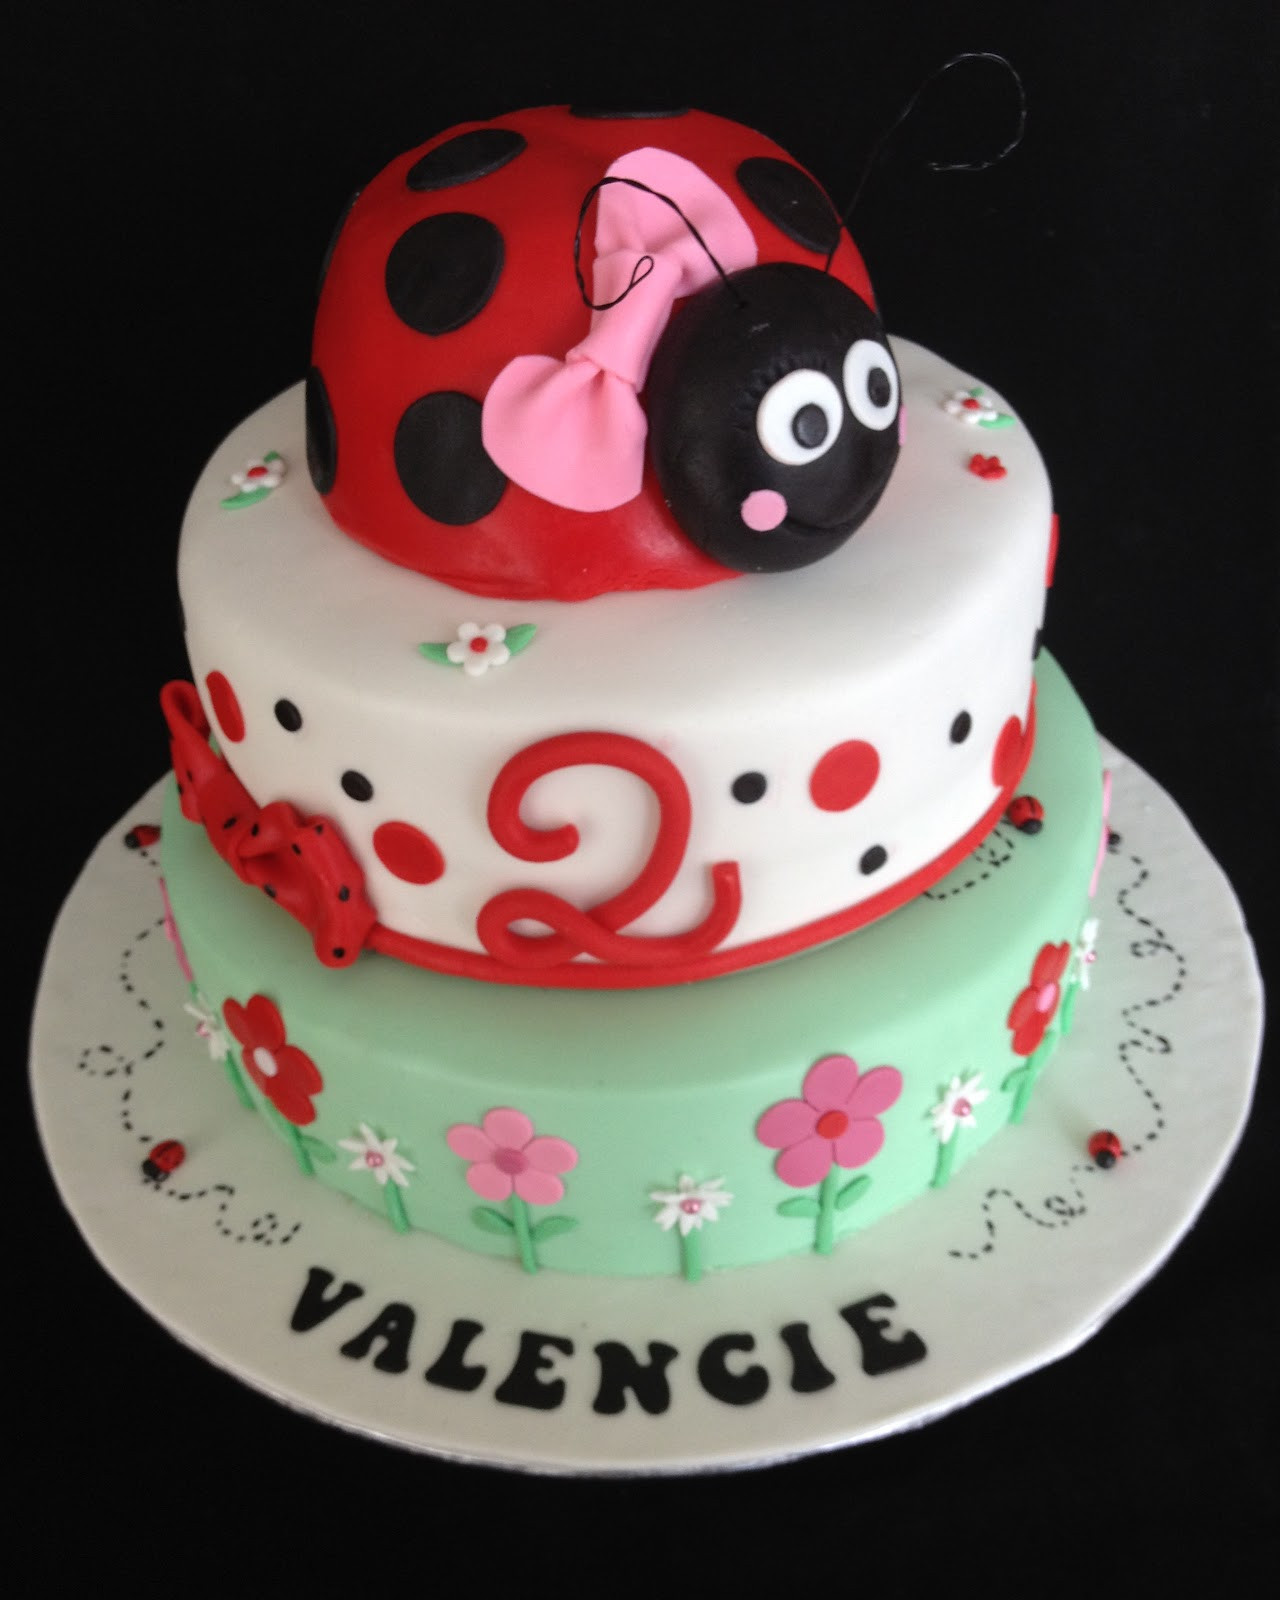 Best ideas about Ladybug Birthday Cake
. Save or Pin Ladybug Birthday Cake Now.